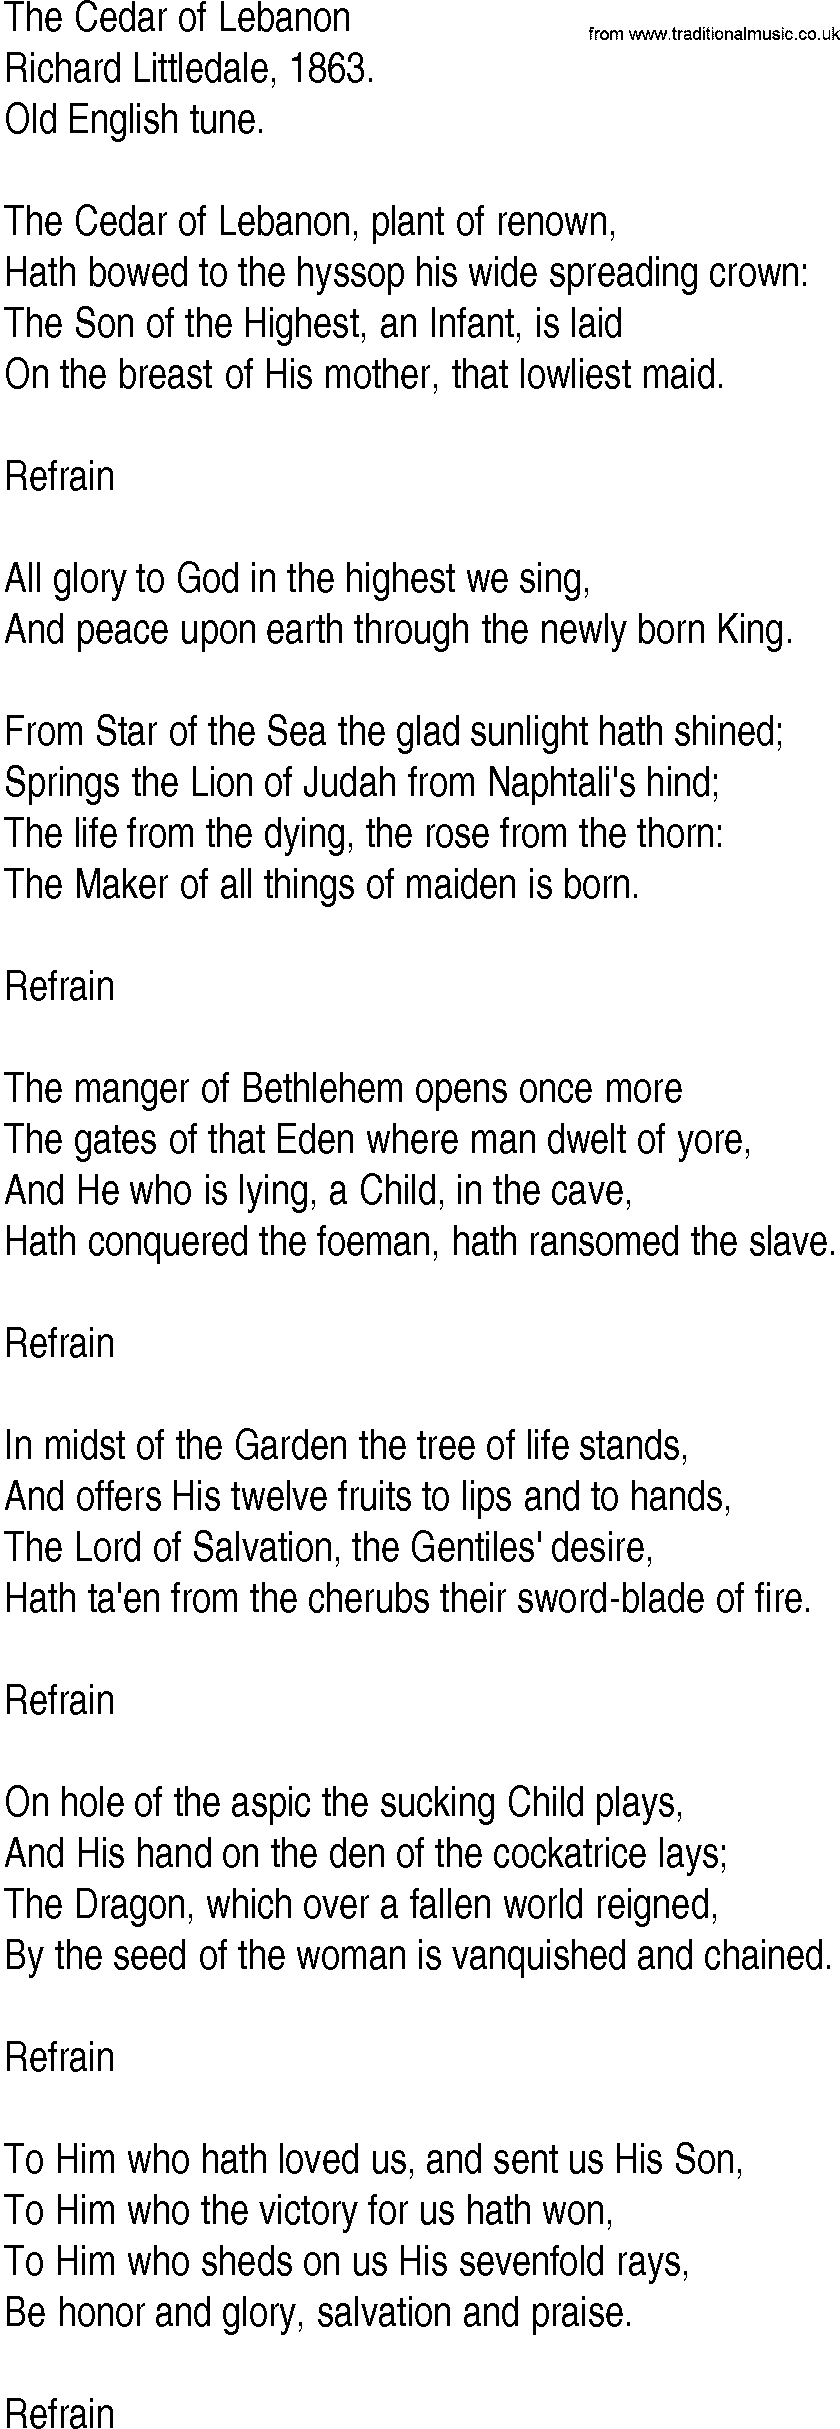 Hymn and Gospel Song: The Cedar of Lebanon by Richard Littledale lyrics